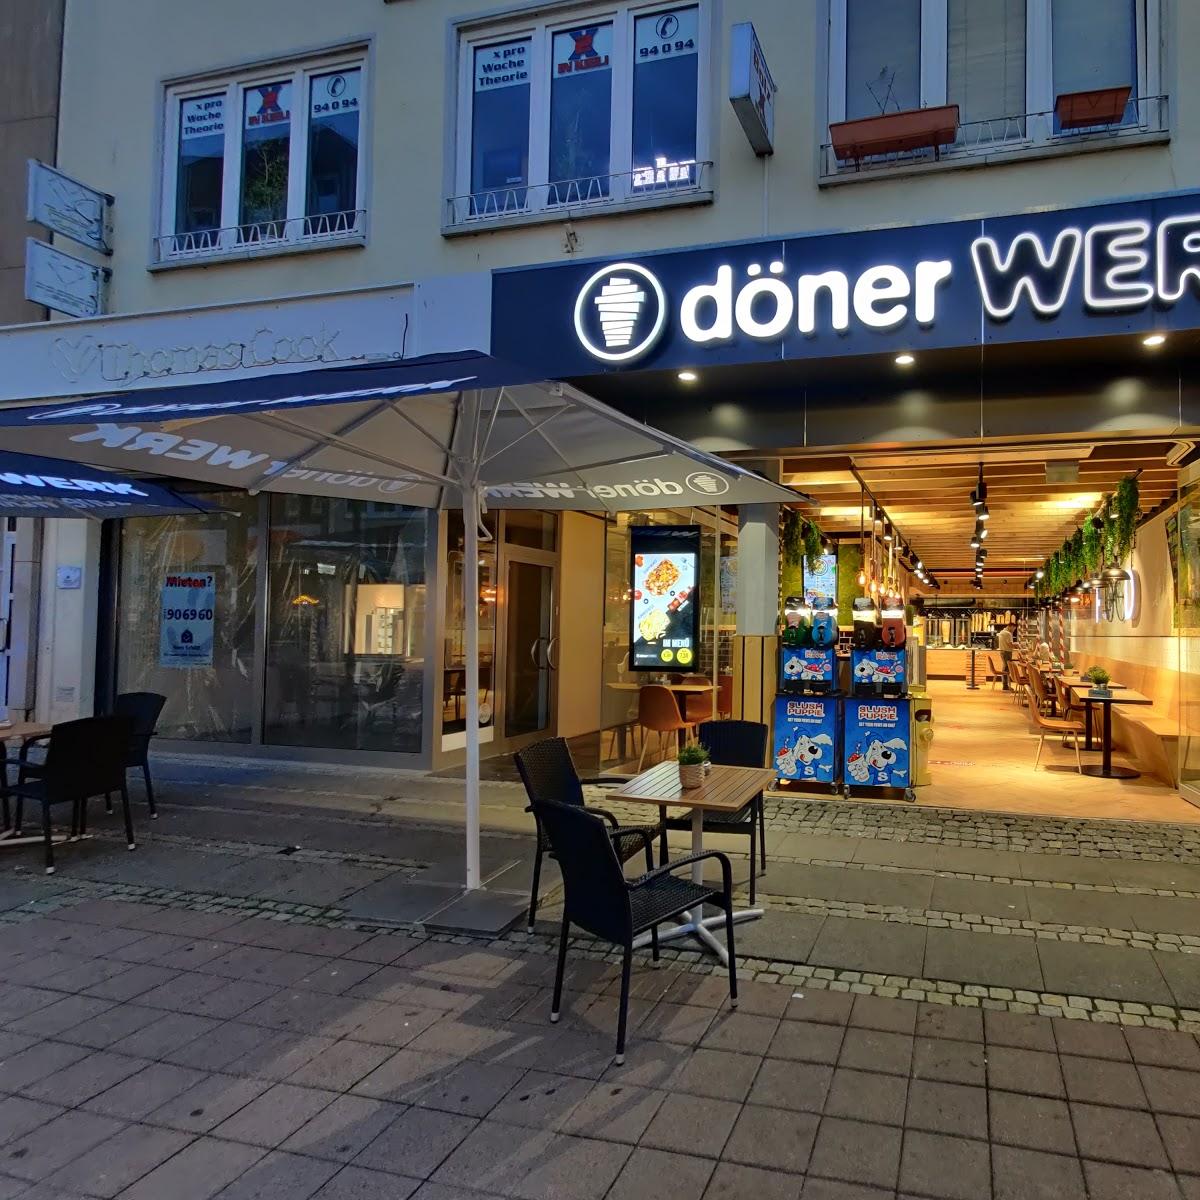 Restaurant "dönerWERK" in Kiel